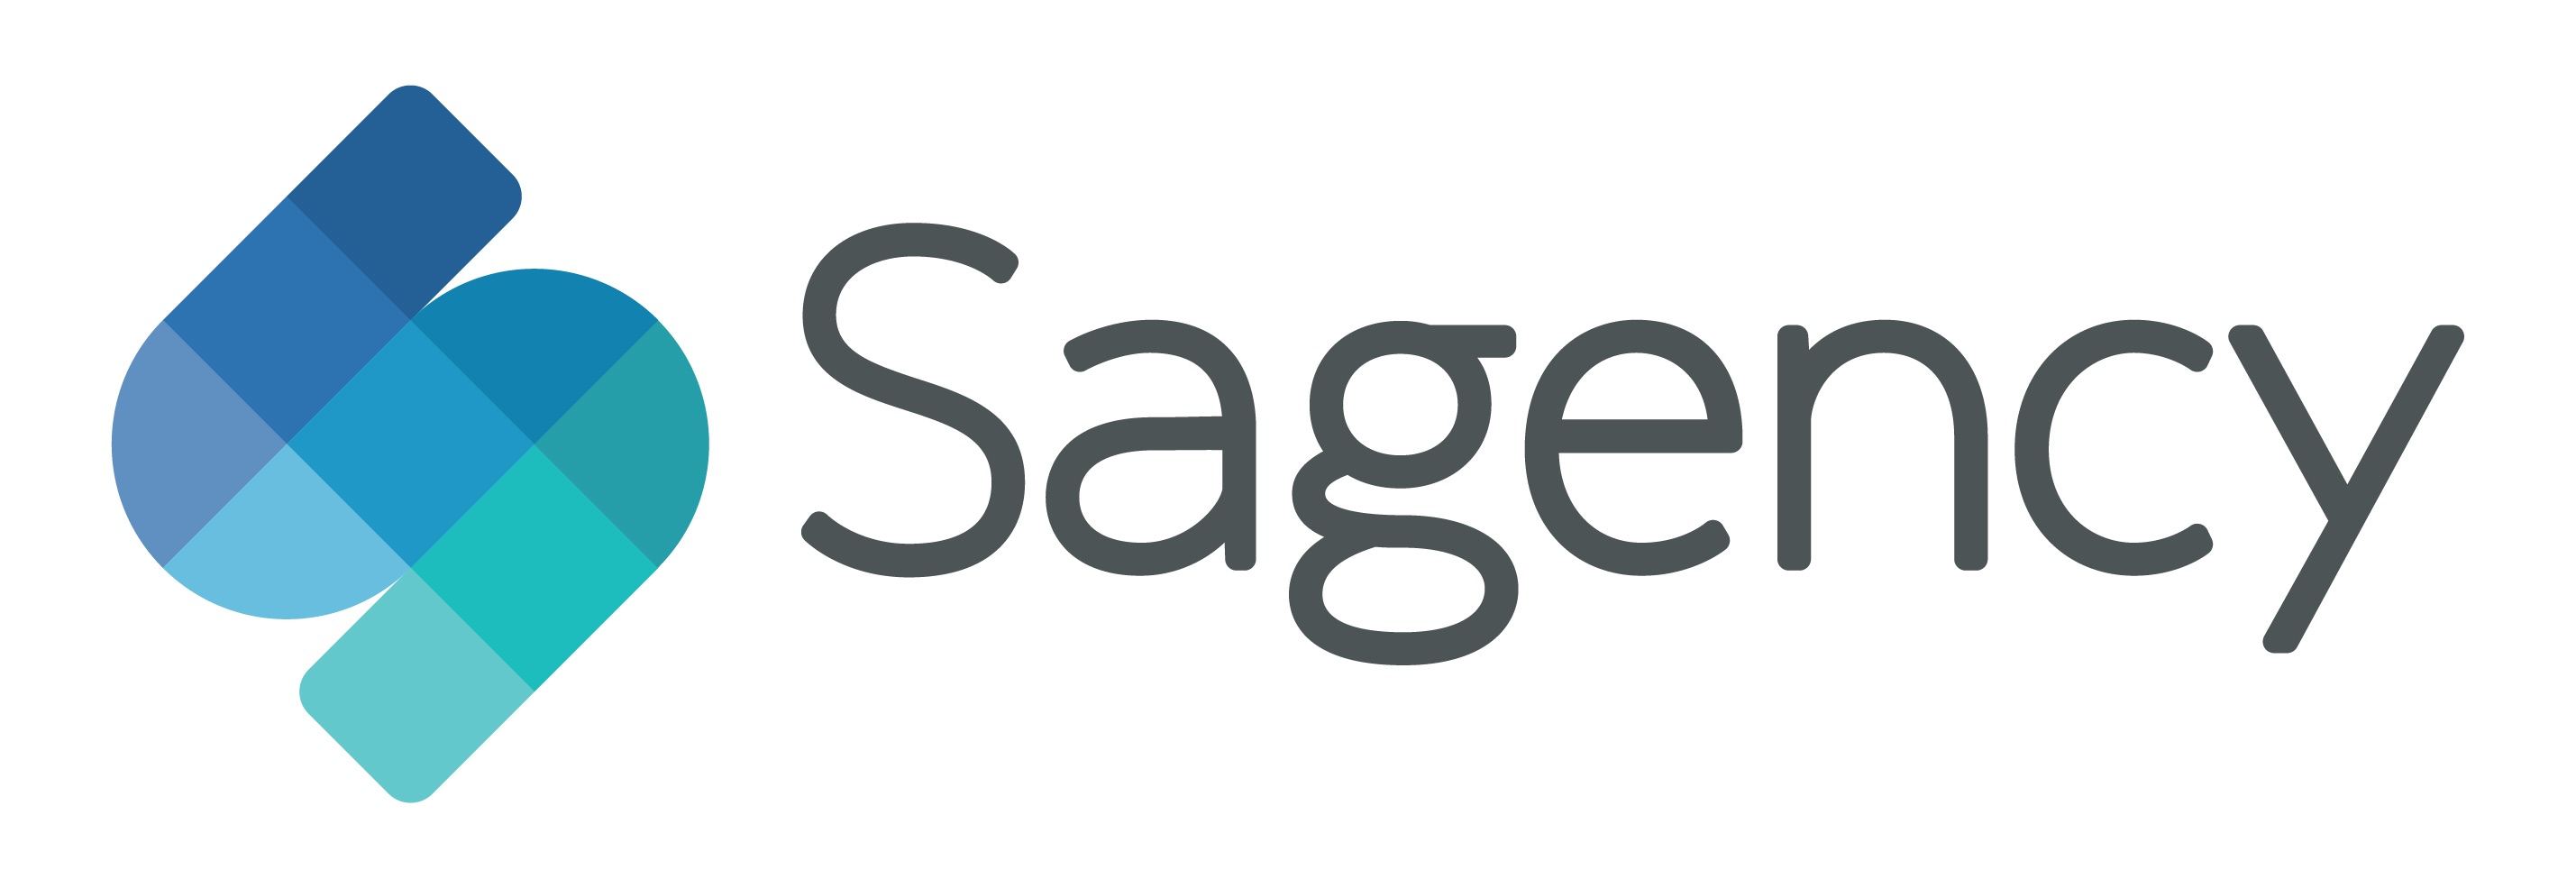 sagency Logo